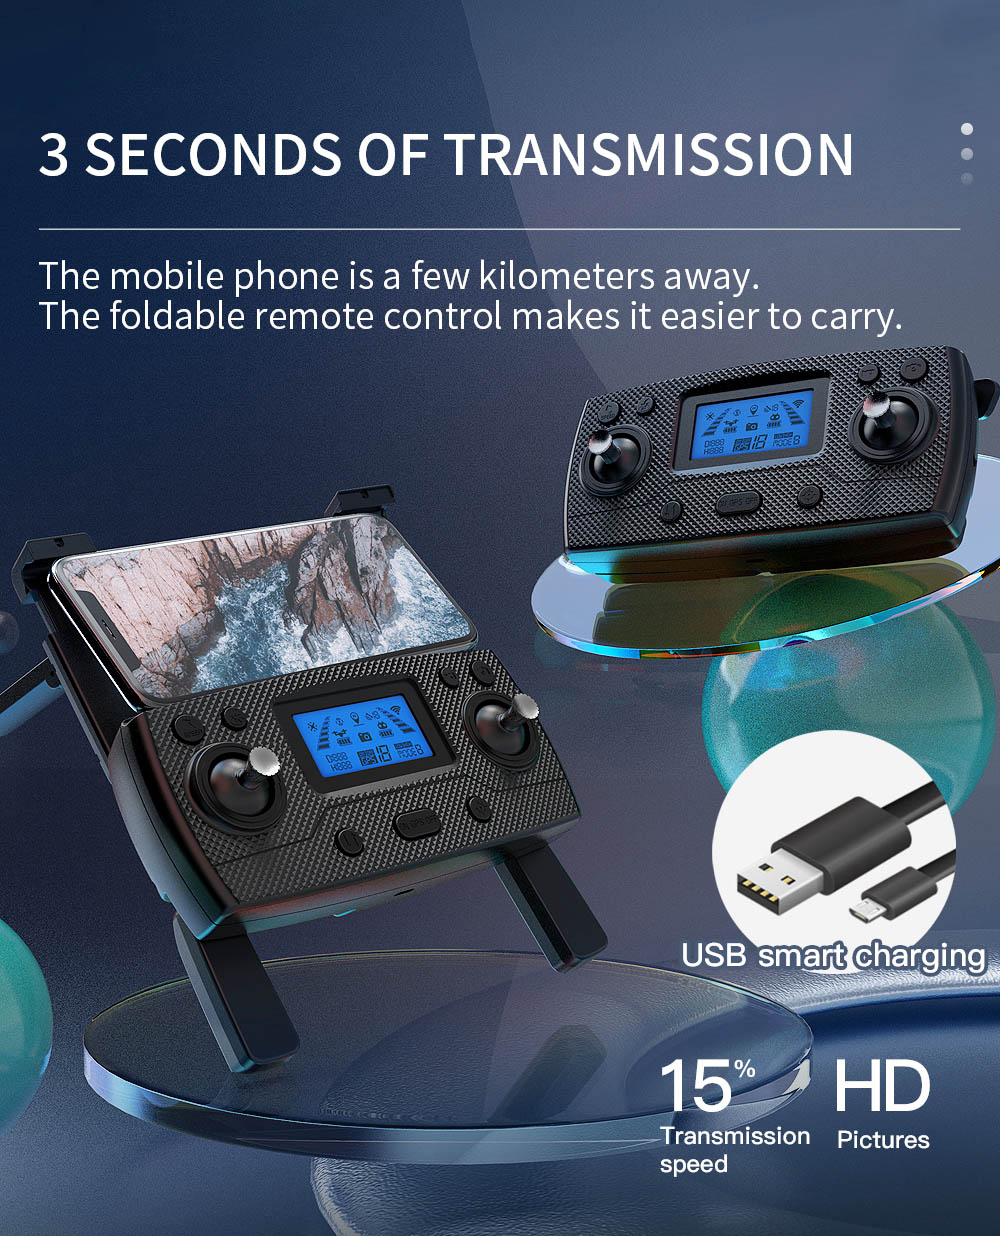 ZLL SG907 MAX SE 4K 5G WIFI FPV GPS Opvouwbare RC Drone met Dual Camera RTF - Eén batterij met tas